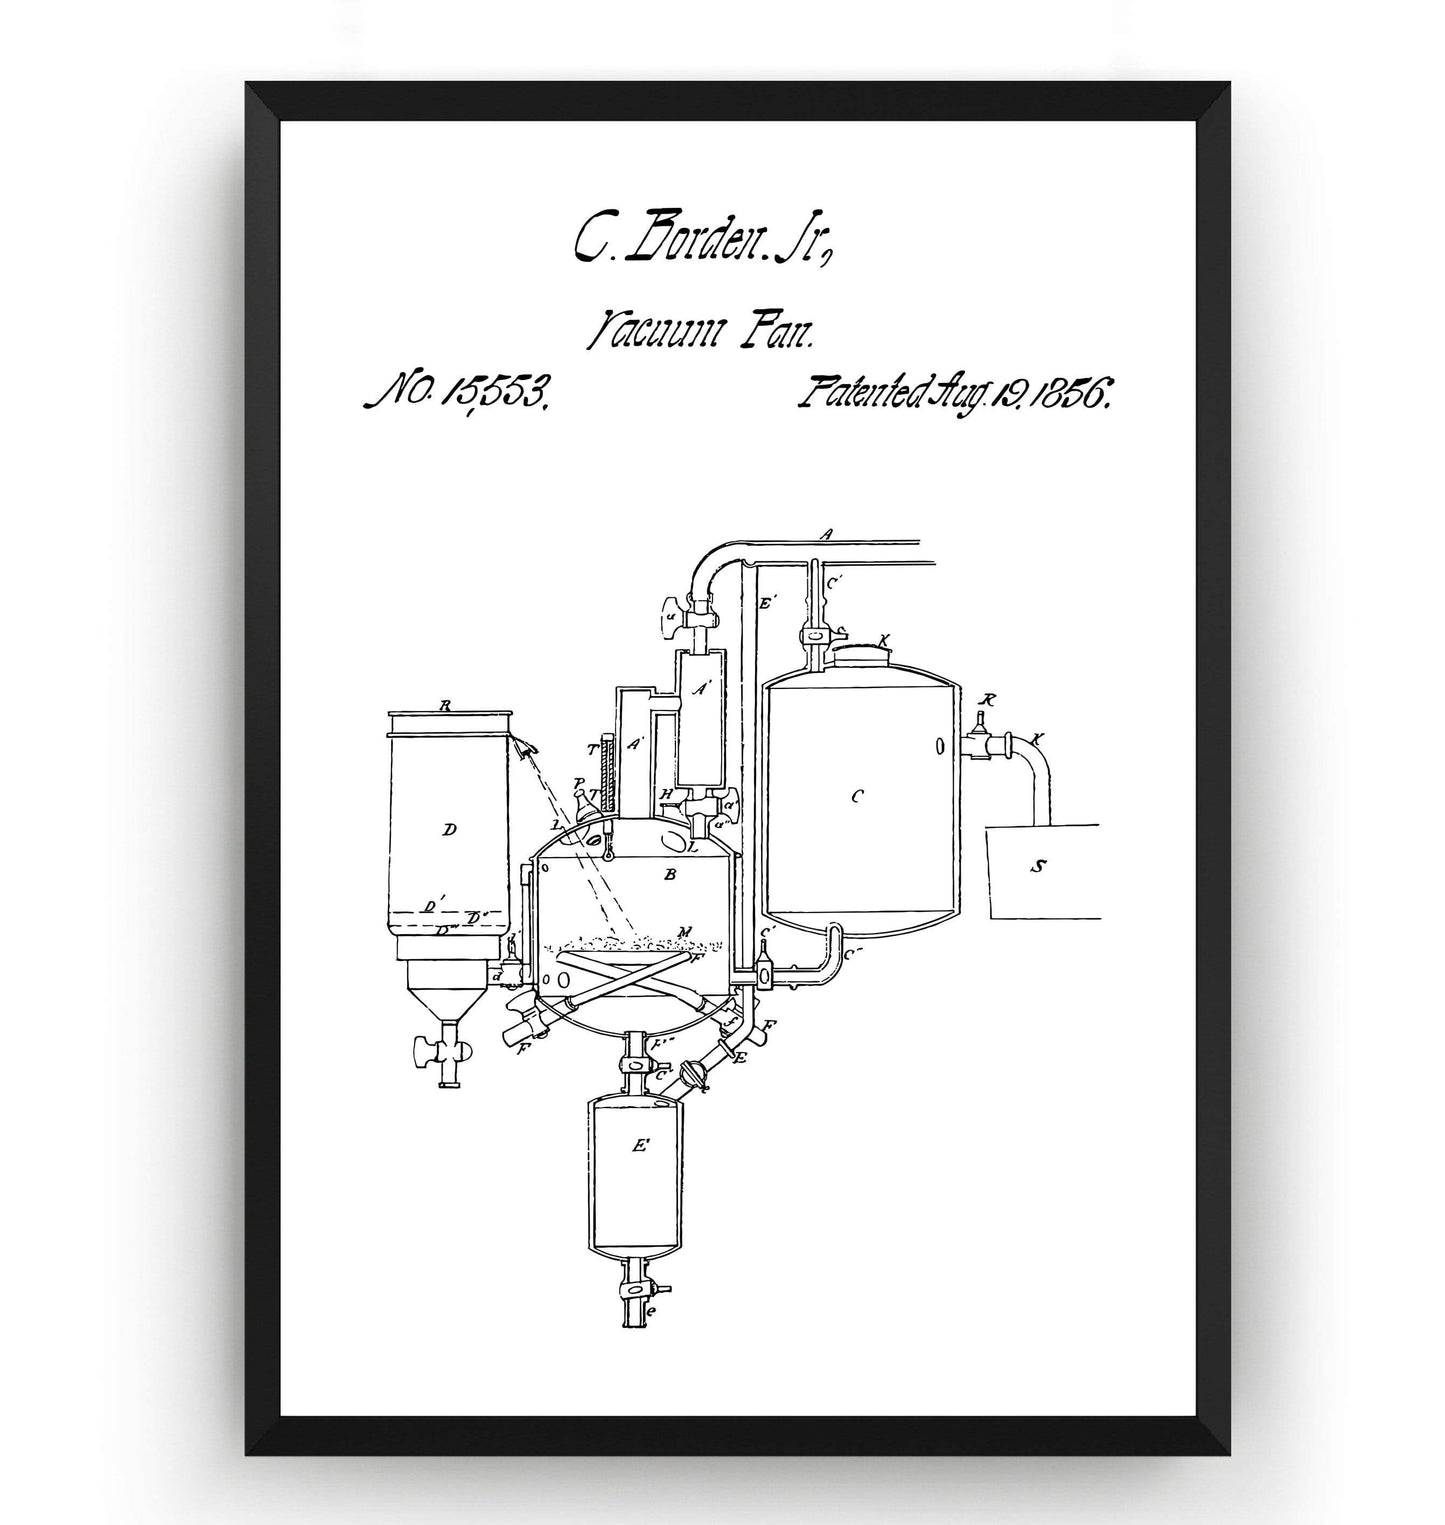 Pasteurized Milk 1856 Patent Print - Magic Posters